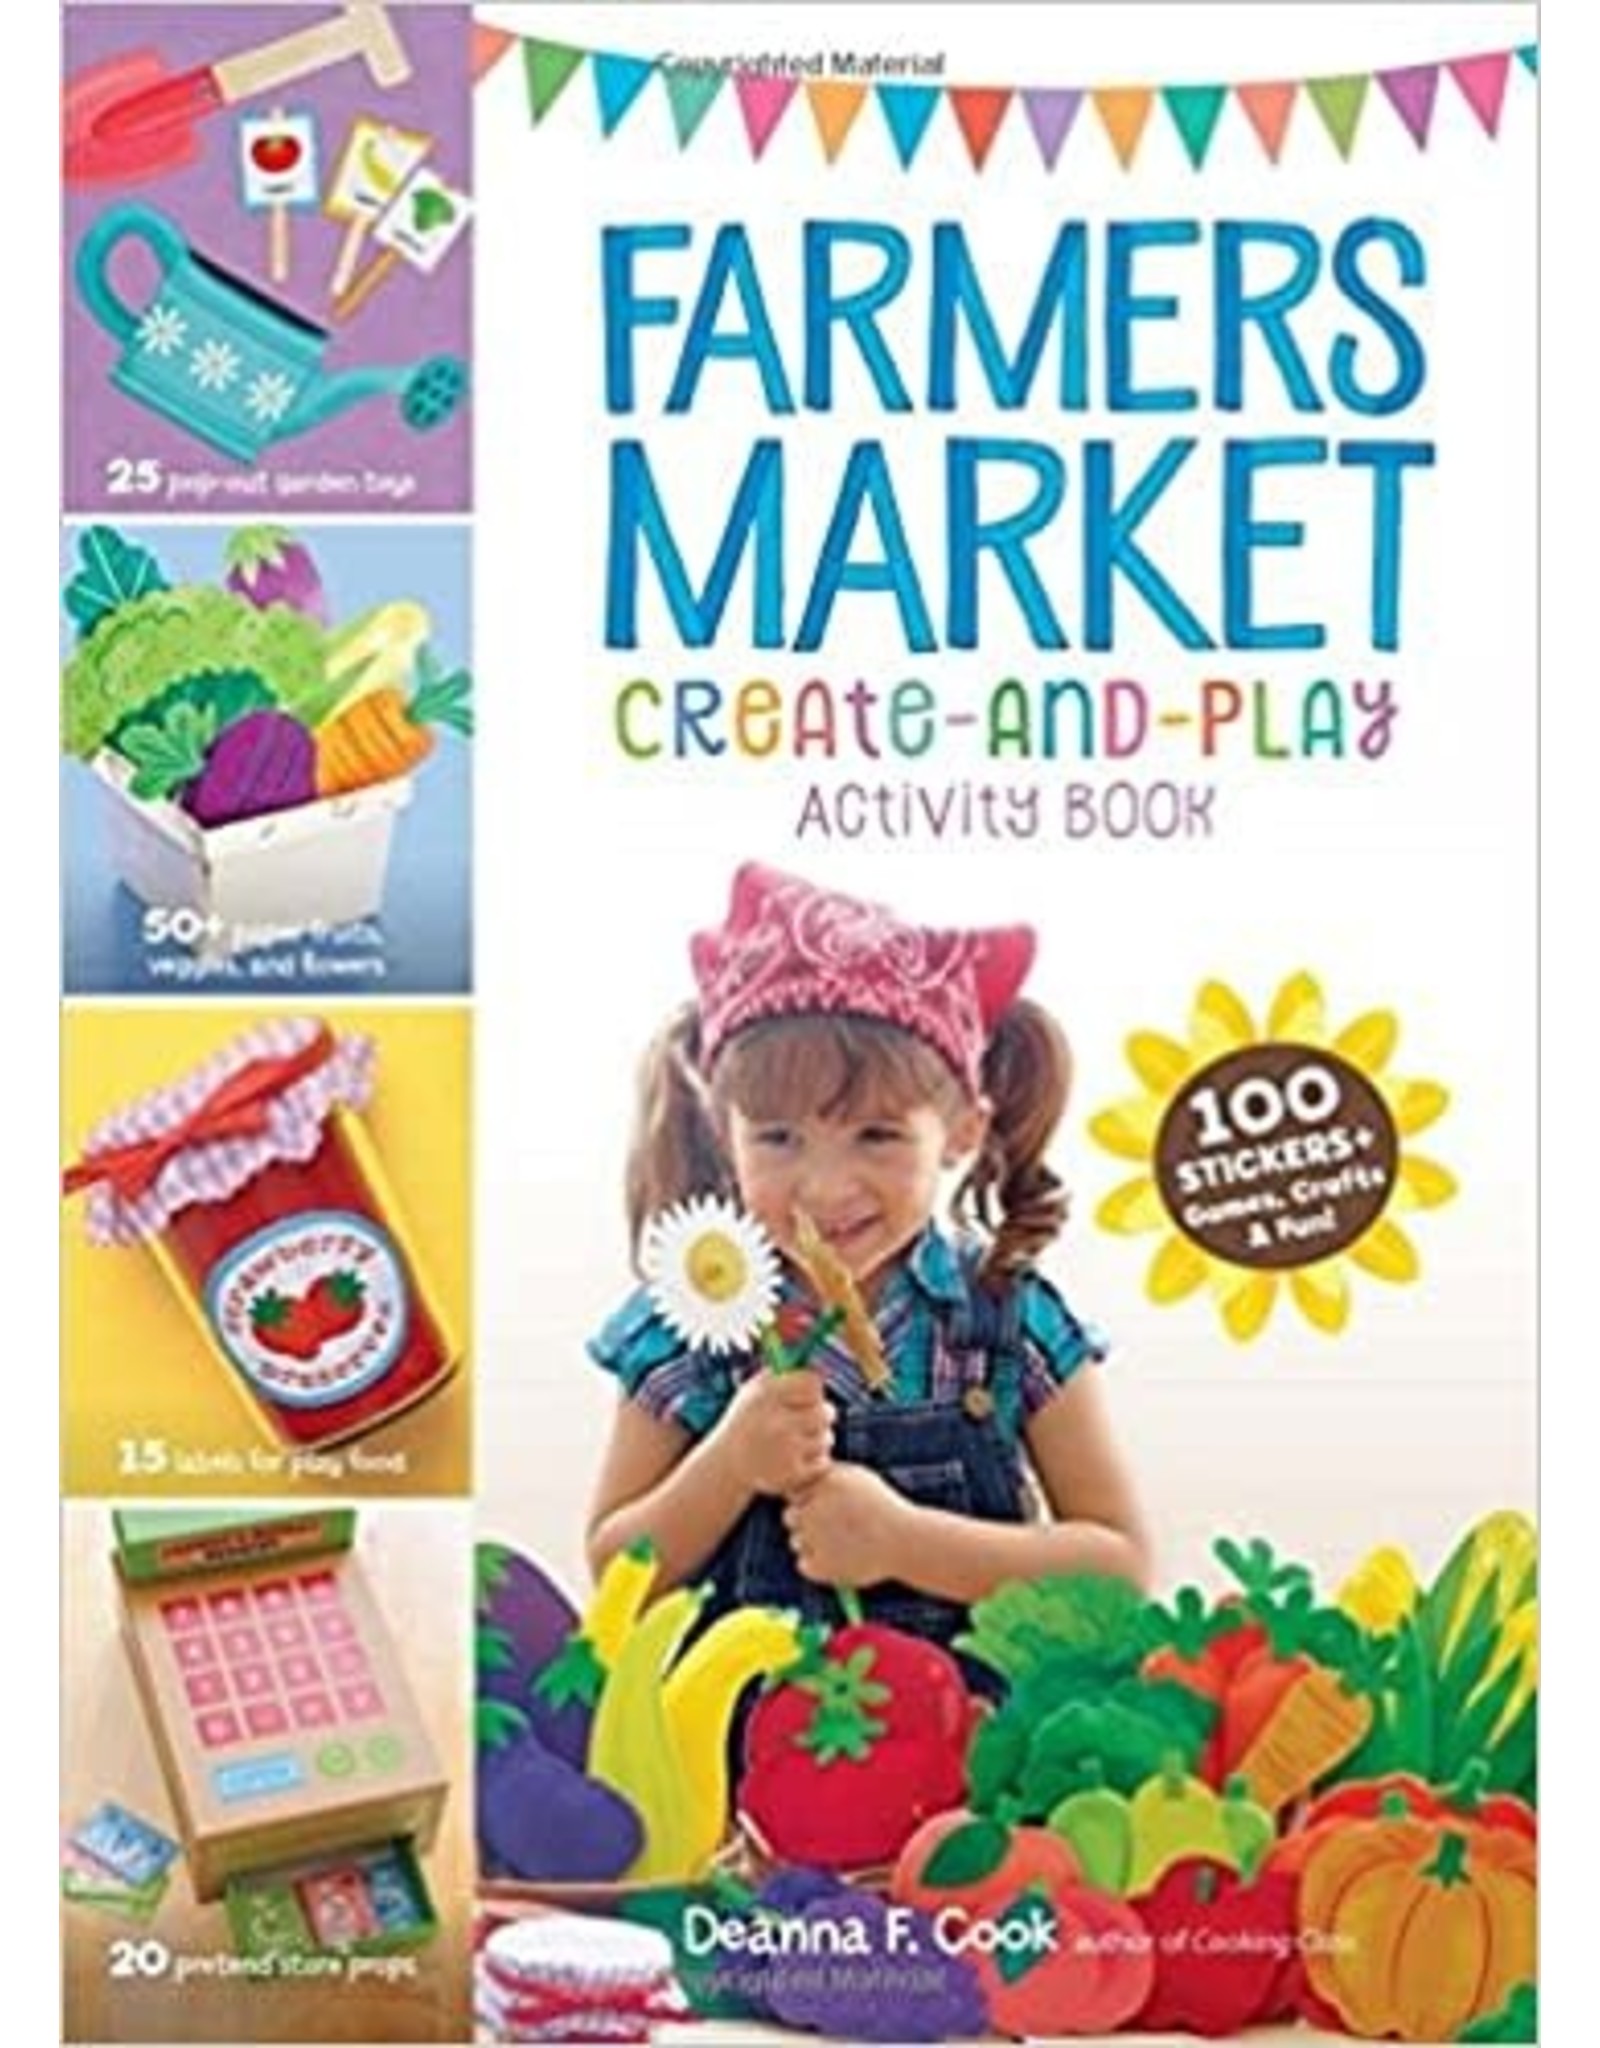 Farmers Market Create-and-Play Activity Book - Deanna F. Cook